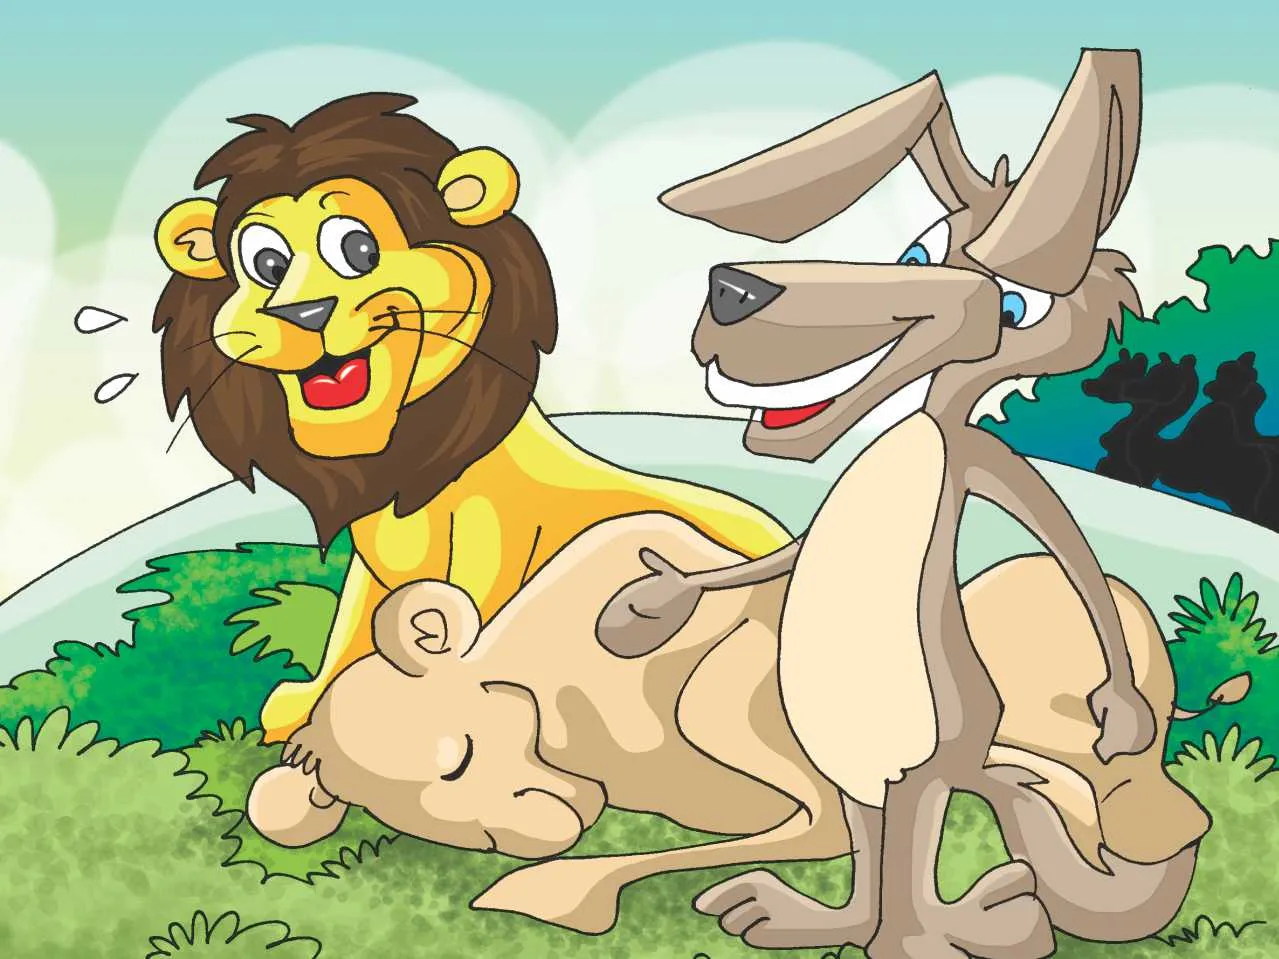 Lion and fox cartoon image